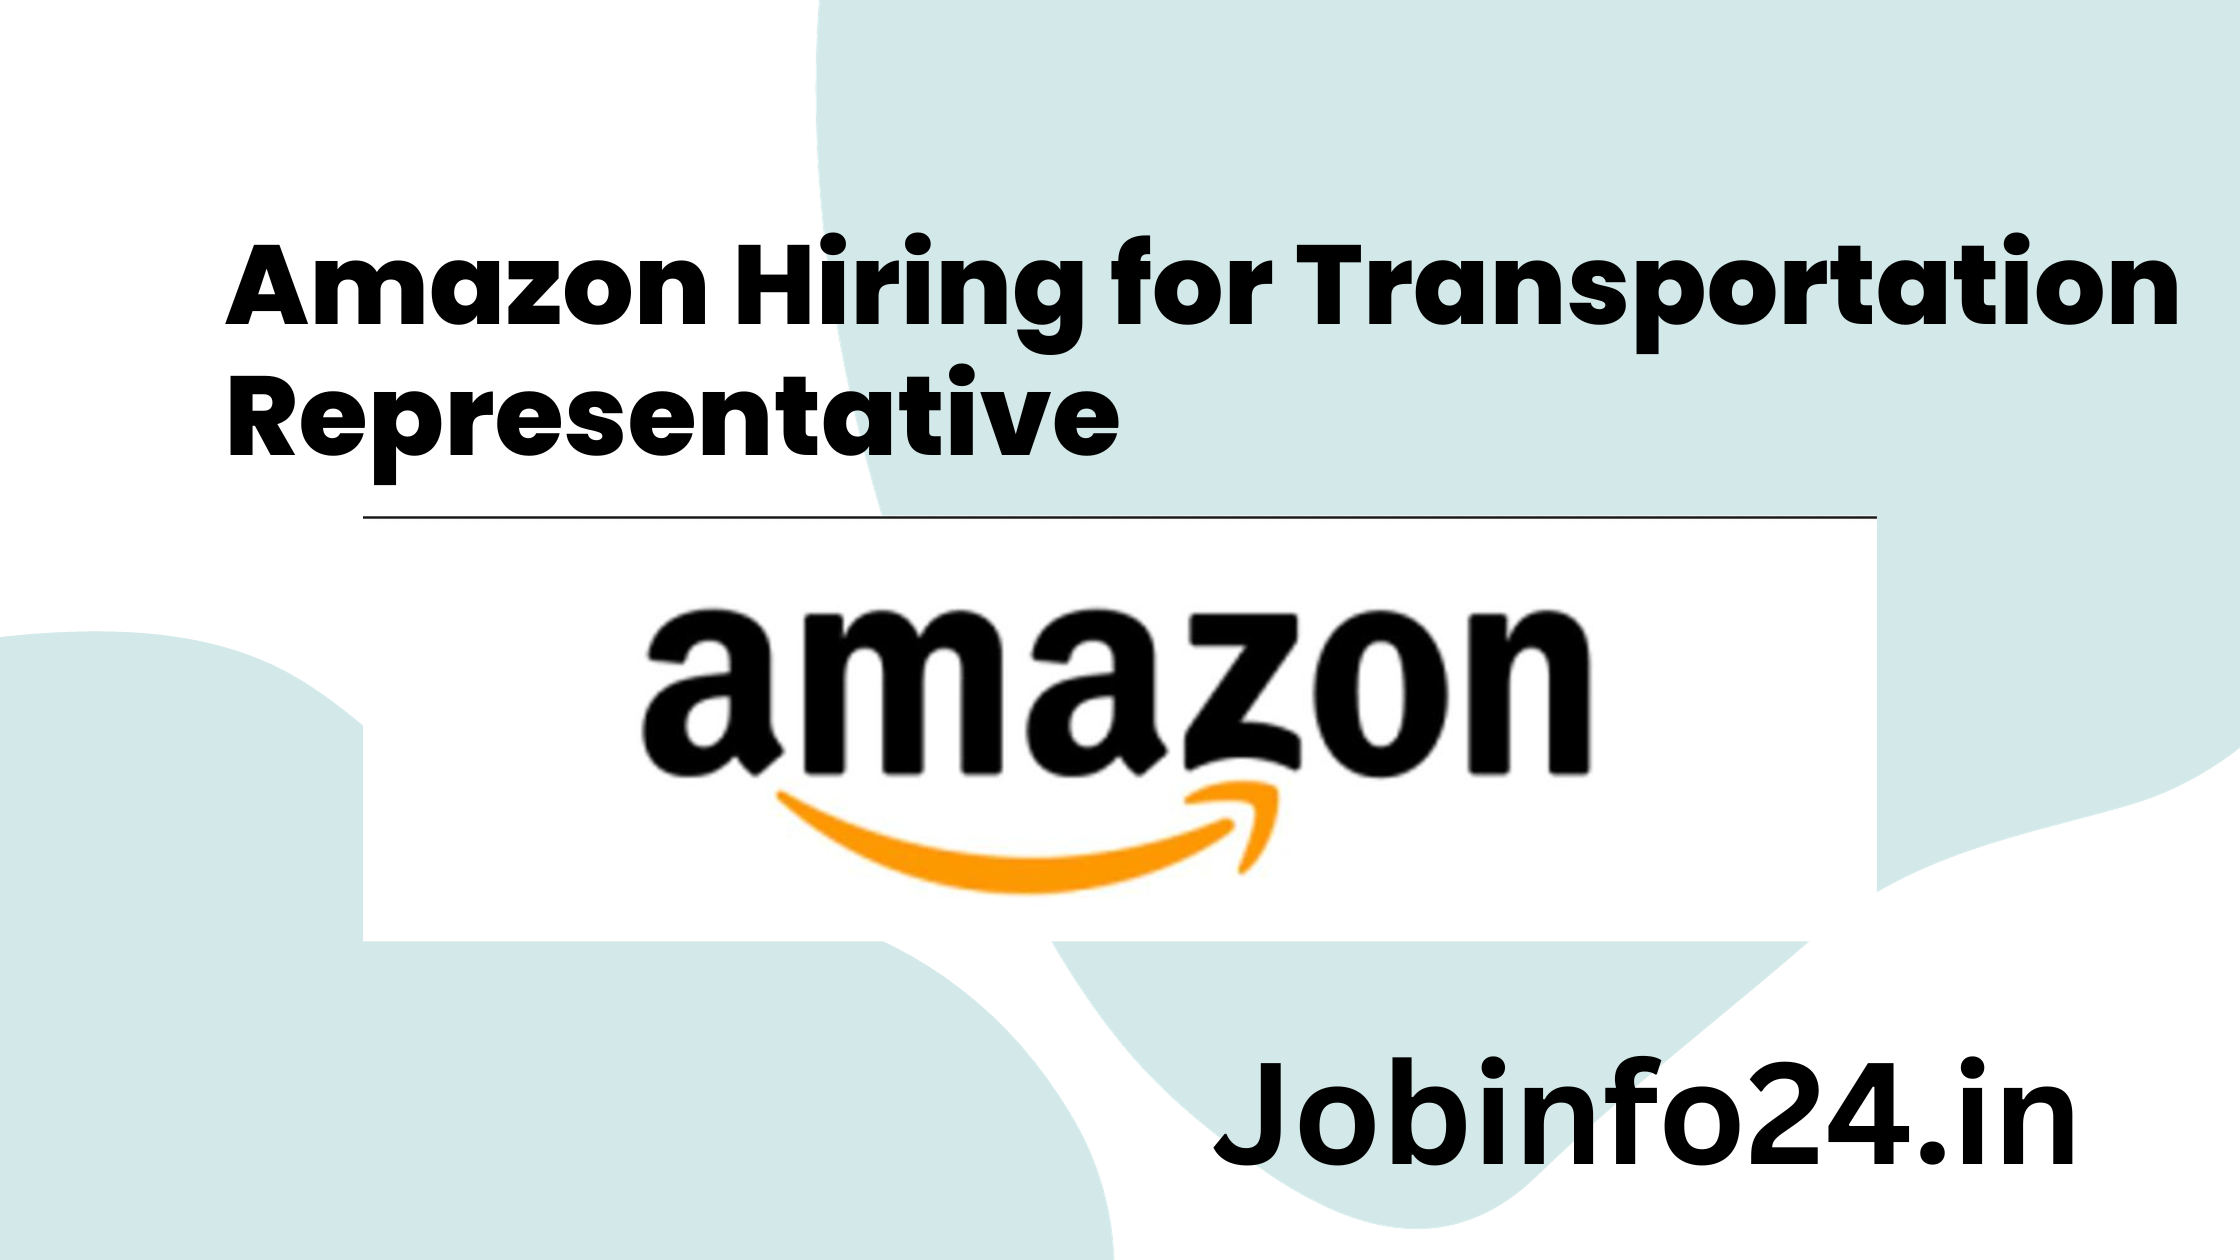 Amazon Hiring for Transportation Representative